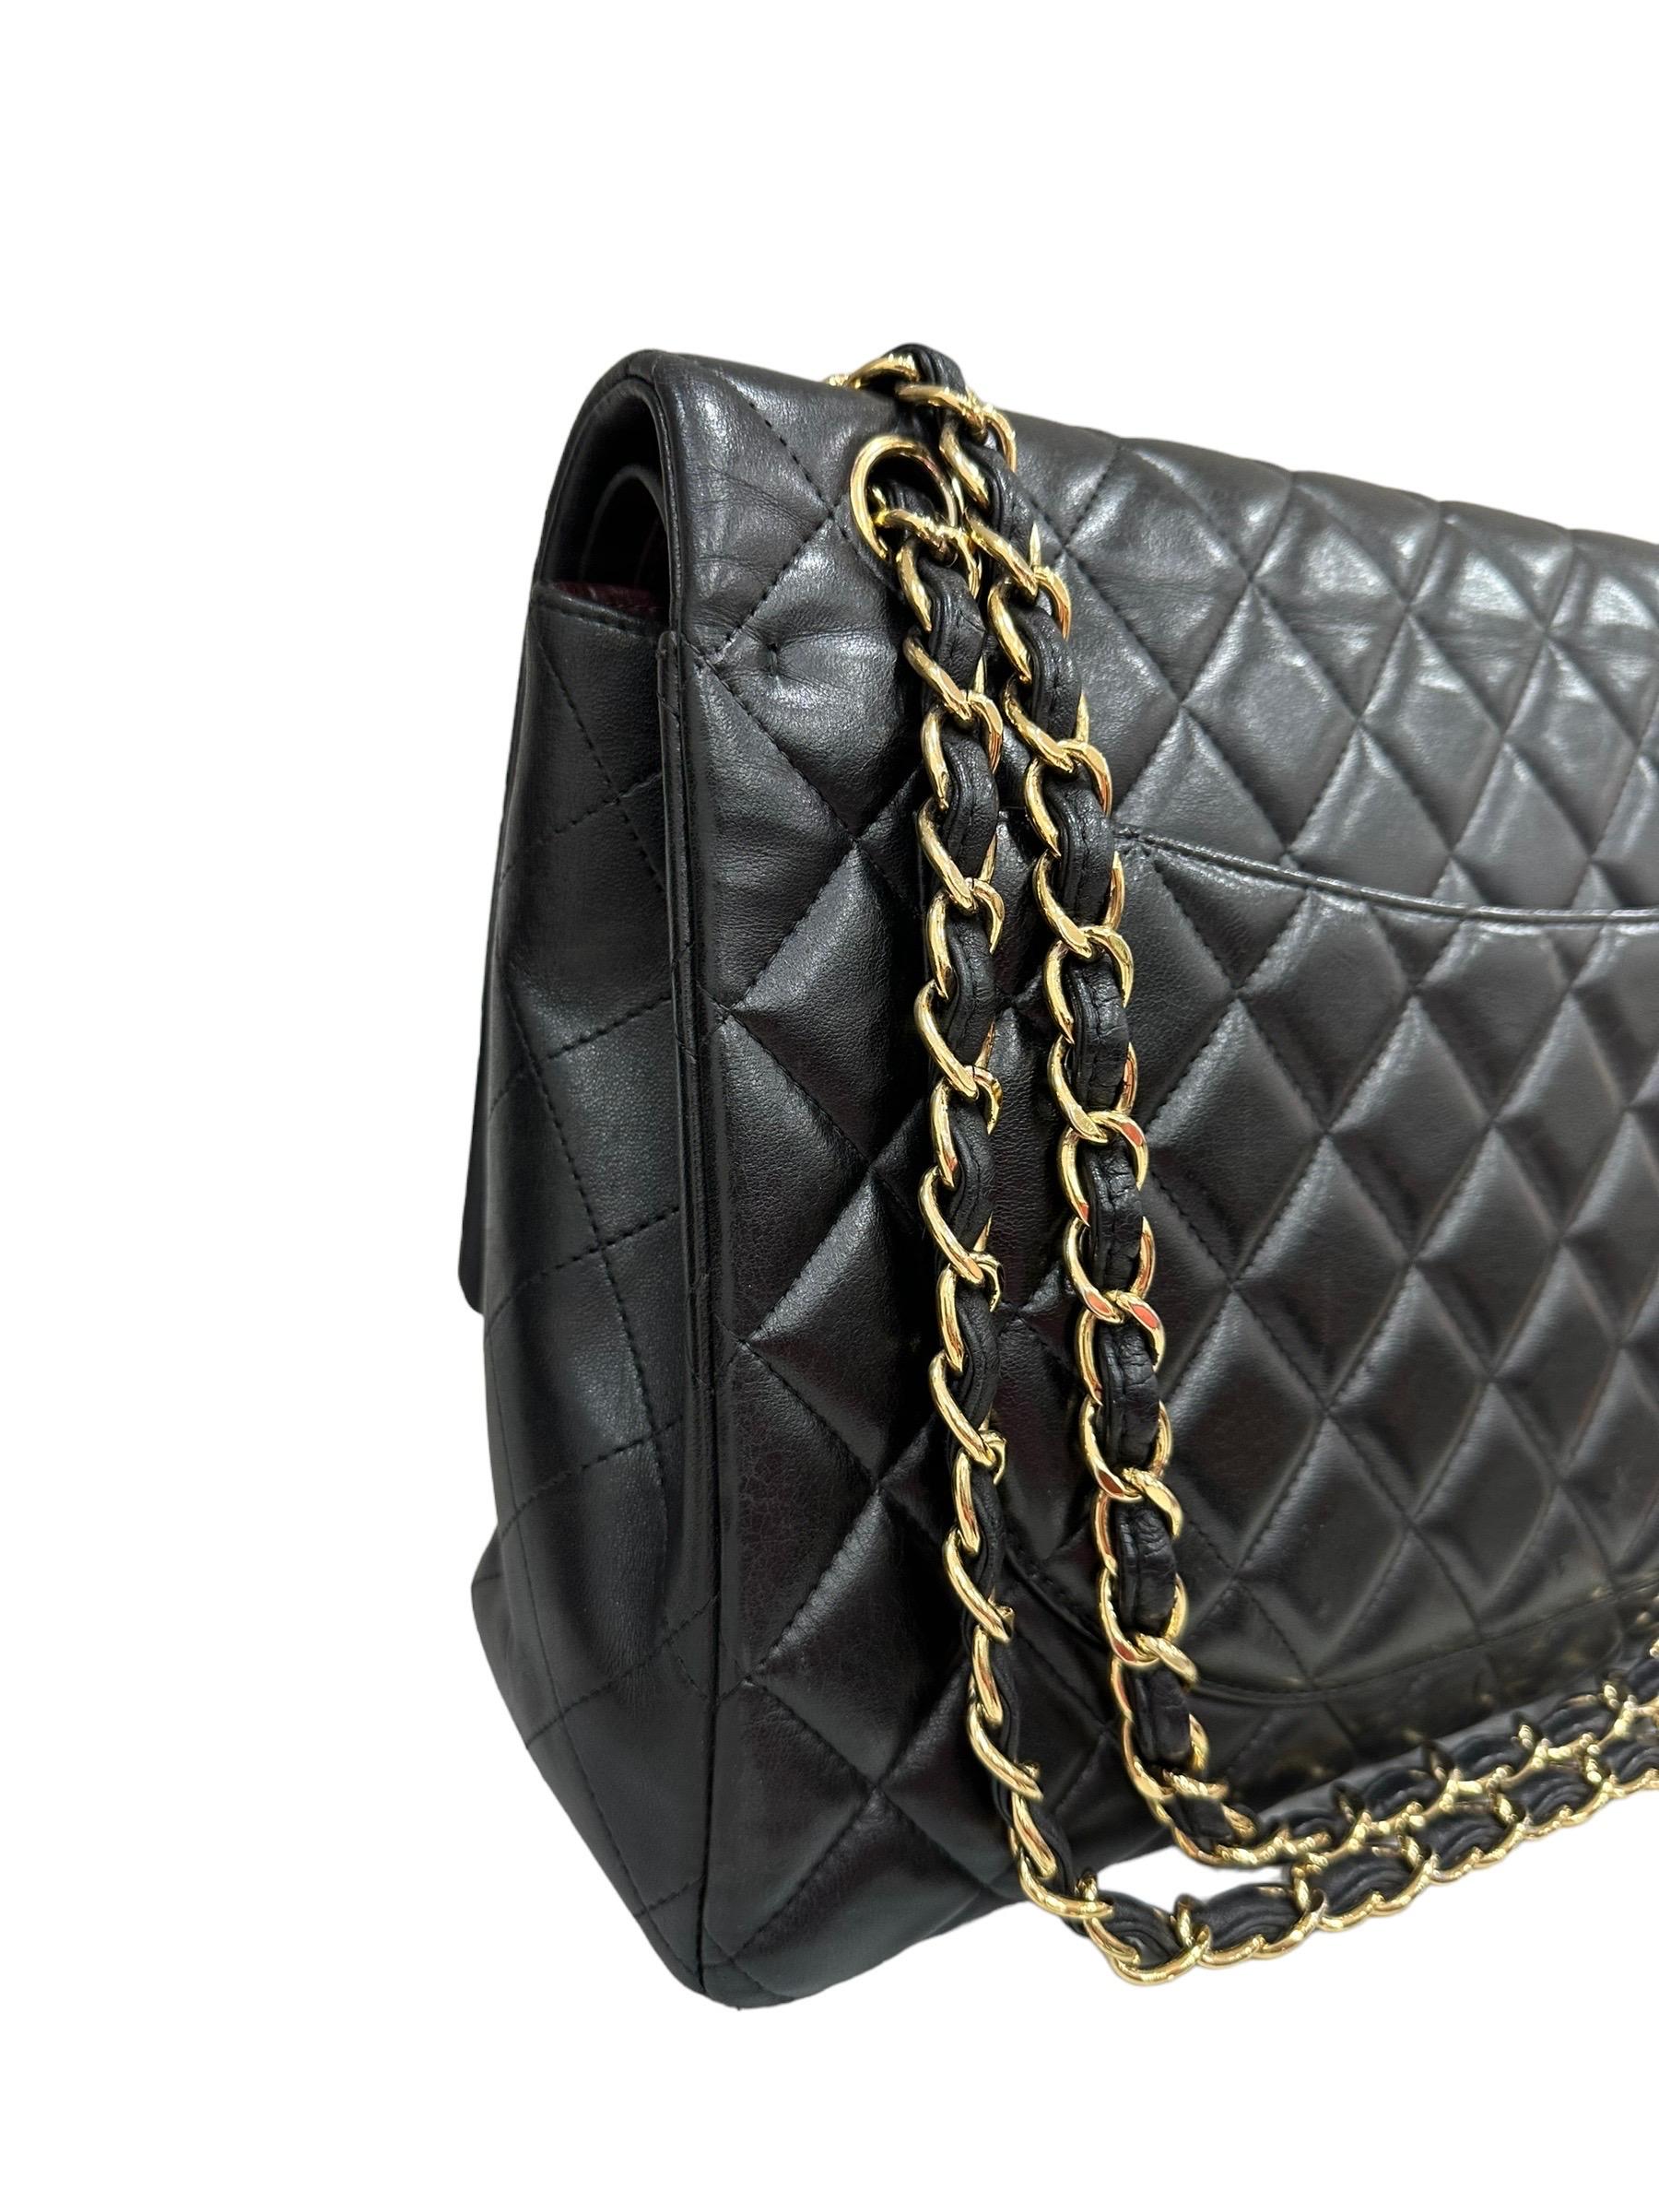 2011 Chanel Timeless Maxi Jumbo Black Leather Top Shoulder Bag 1